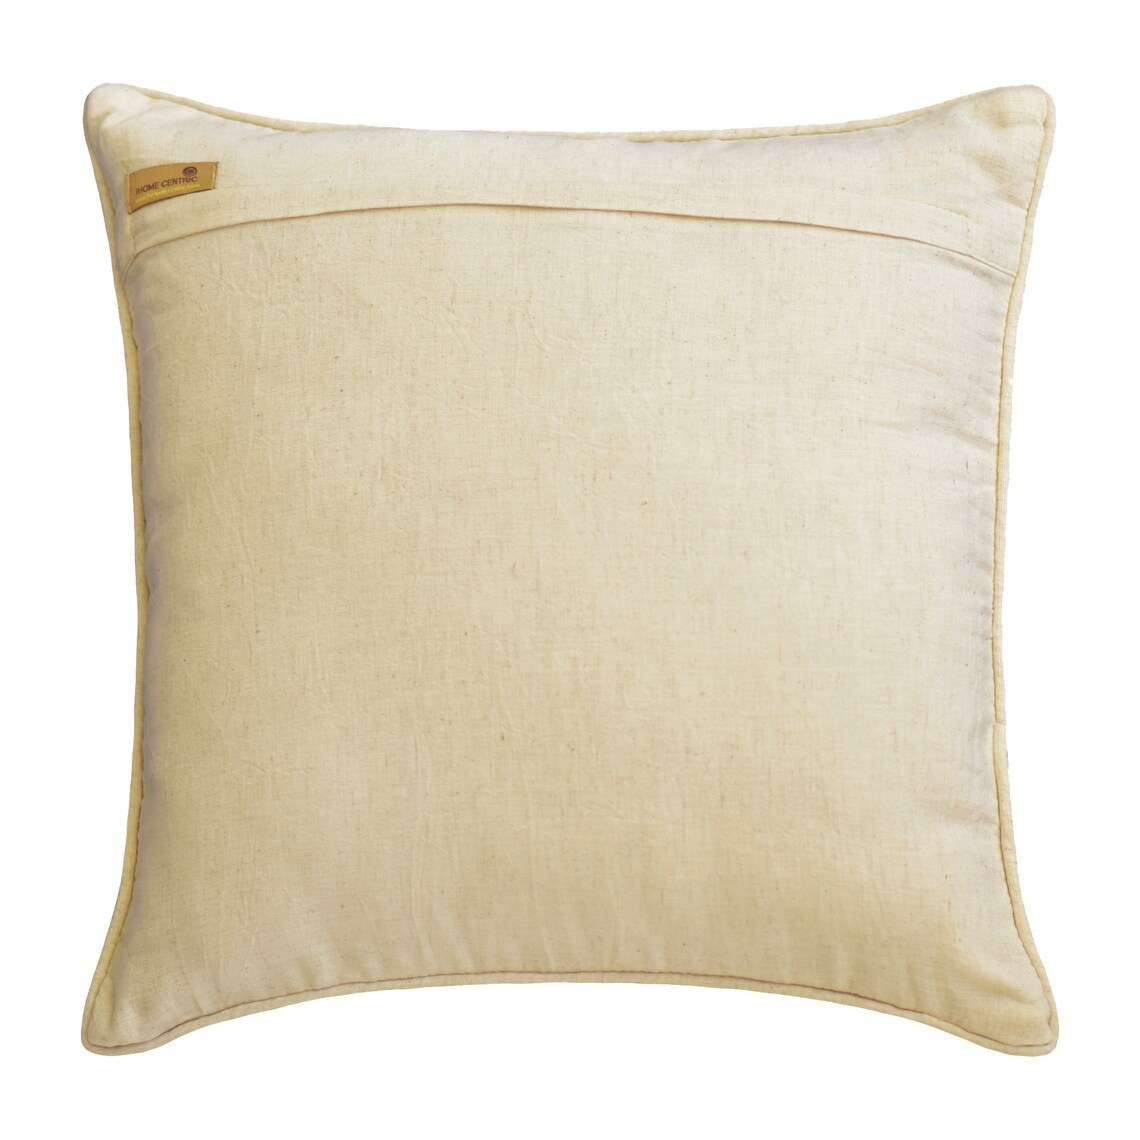 Beige, Grey Mustard Linen 16"x16" Throw Pillow Cover - Shabby Chic Love - $39.78 - $82.42